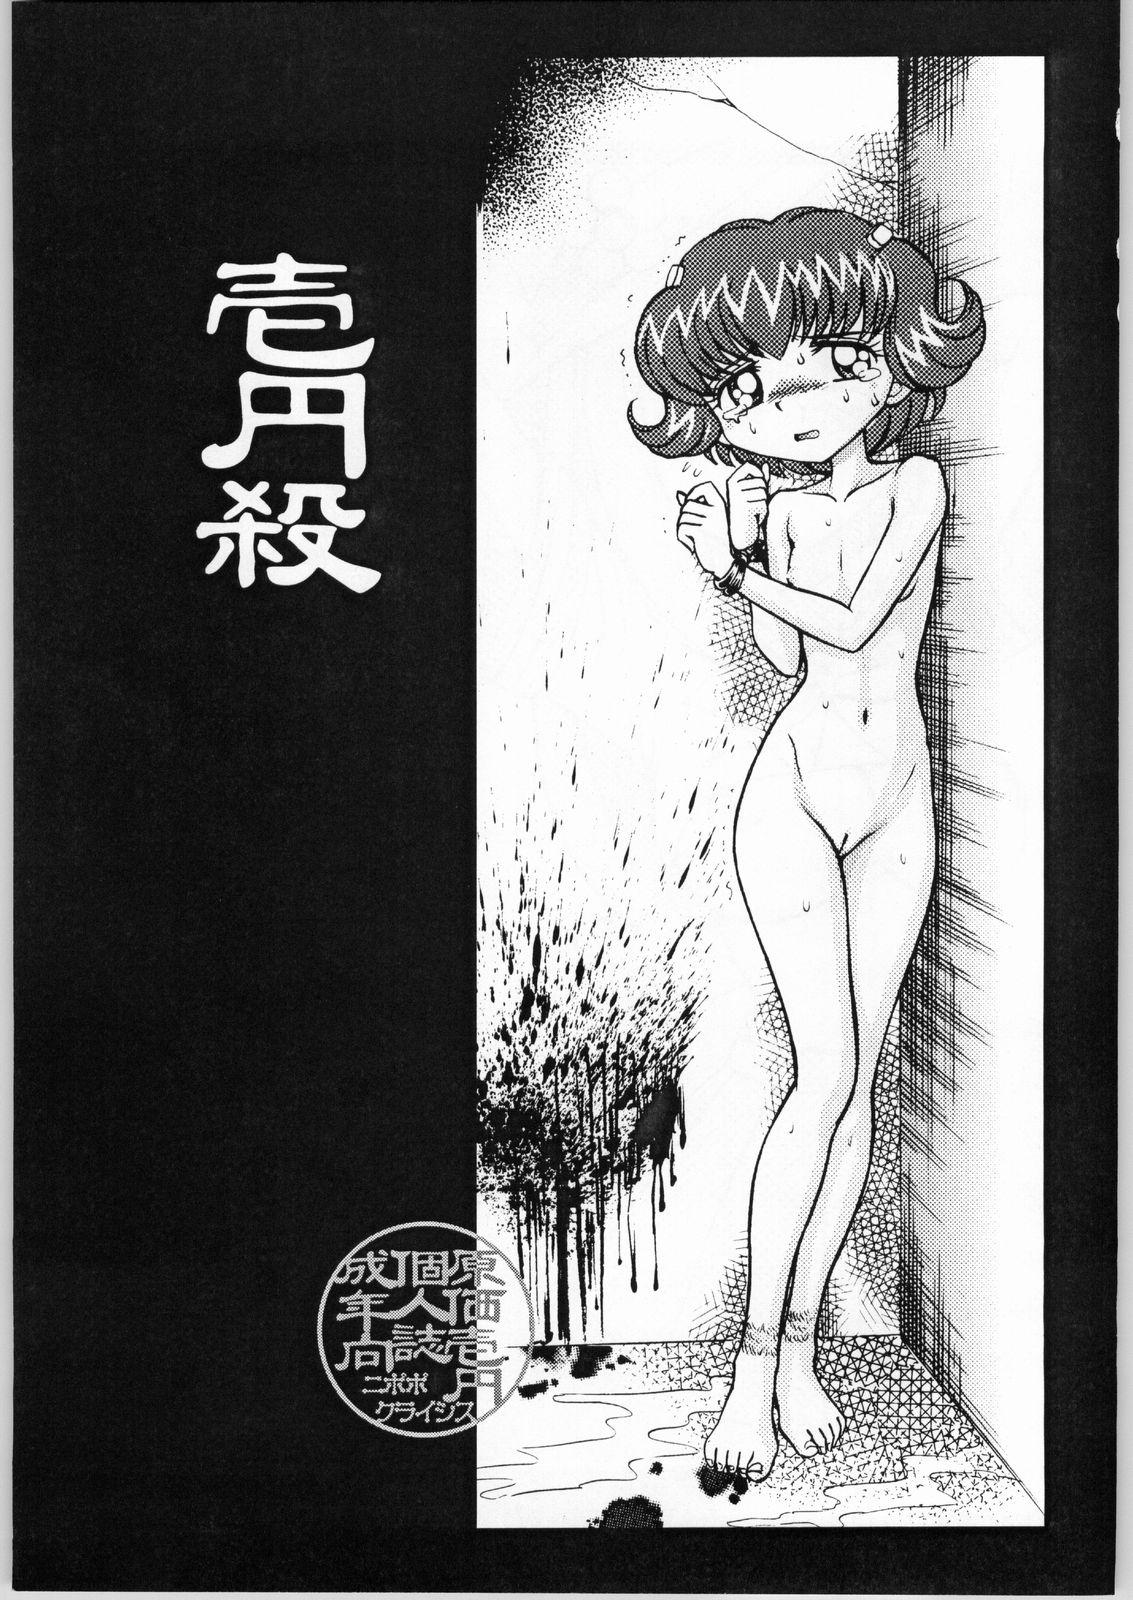 Free Oral Sex Ichien Satsu - Ojamajo doremi Tenchi muyo Martian successor nadesico Turn a gundam Hand maid may Medabots Hamtaro Dominicana - Page 2